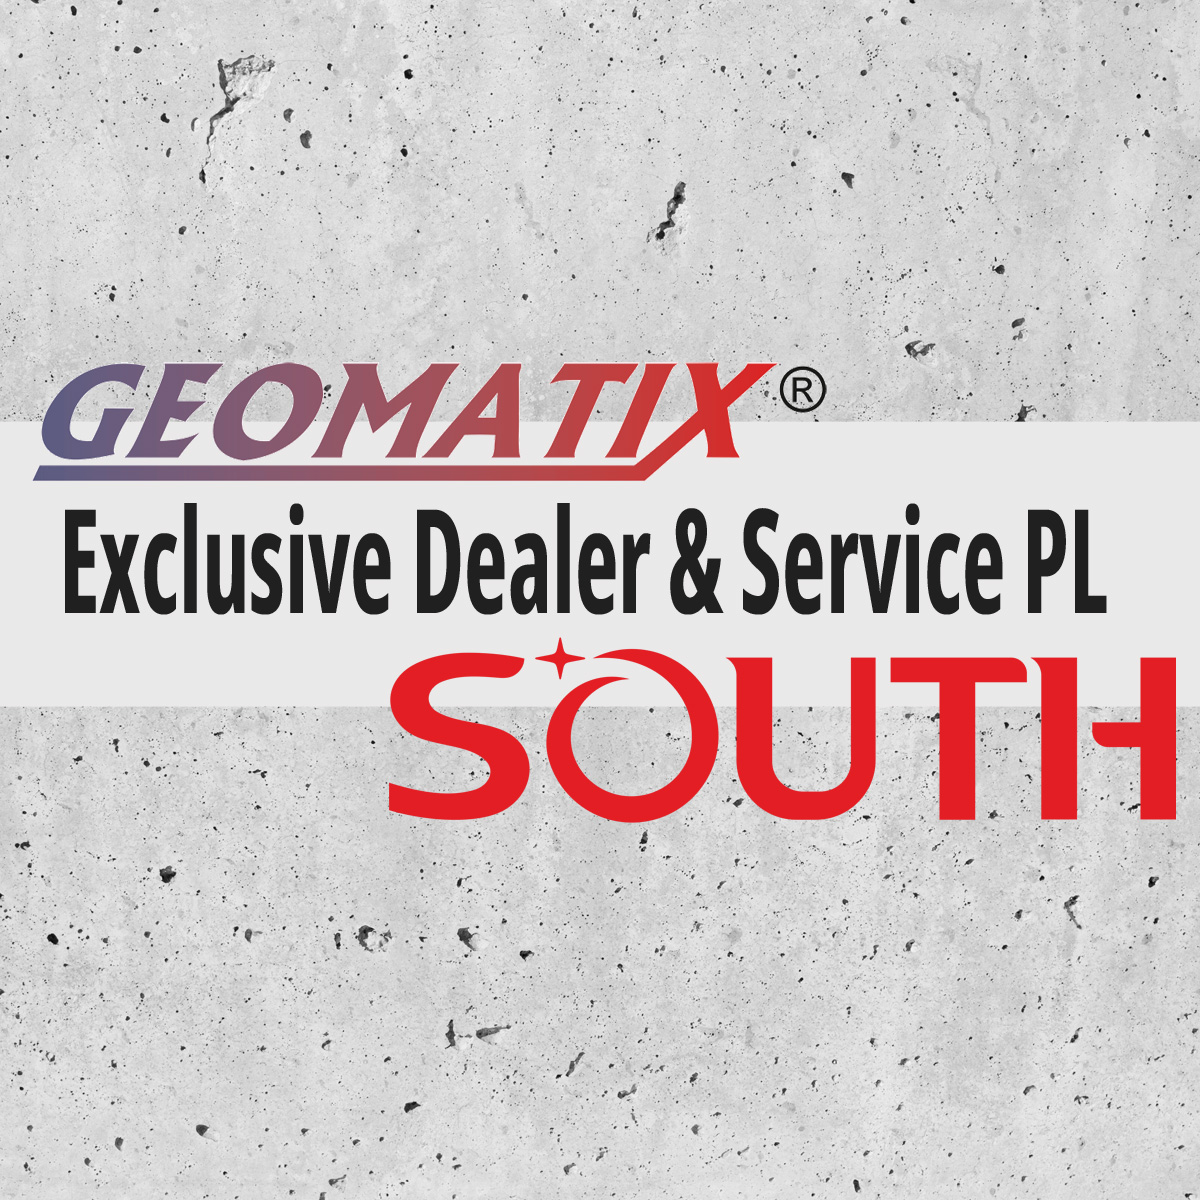 Geomatix - Exclusive Dealer & Service od South